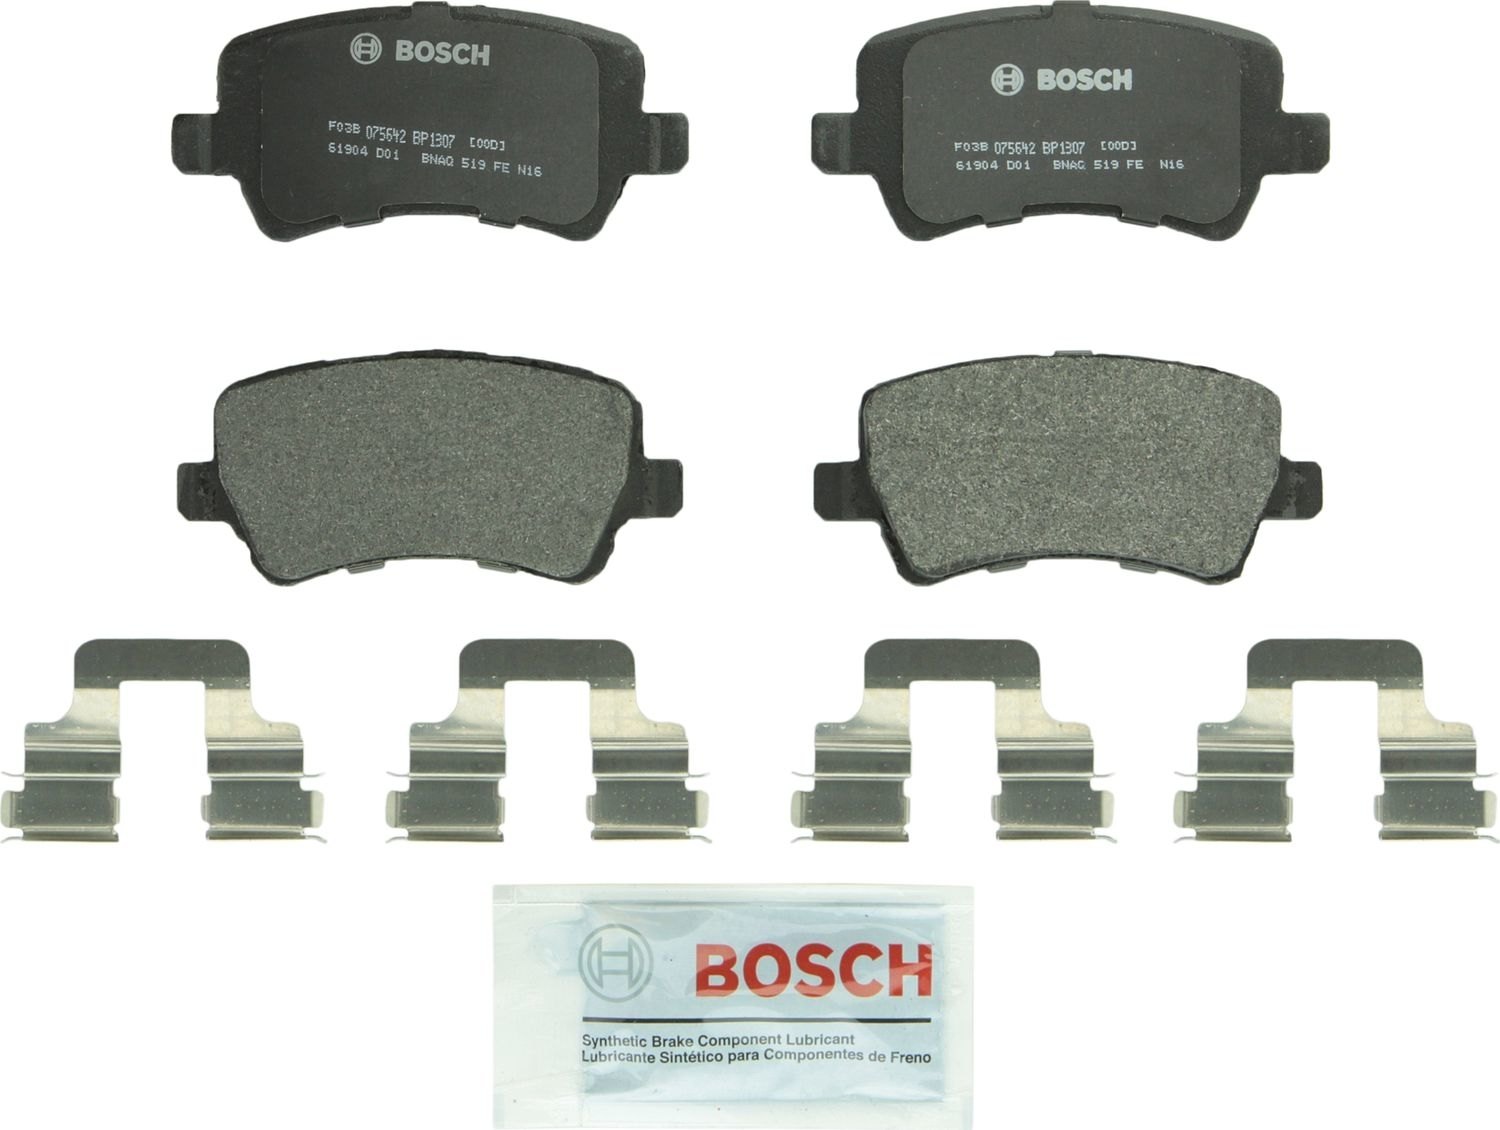 BOSCH BRAKE - Bosch QuietCast Semi-Metallic Brake Pads (Rear) - BQC BP1307